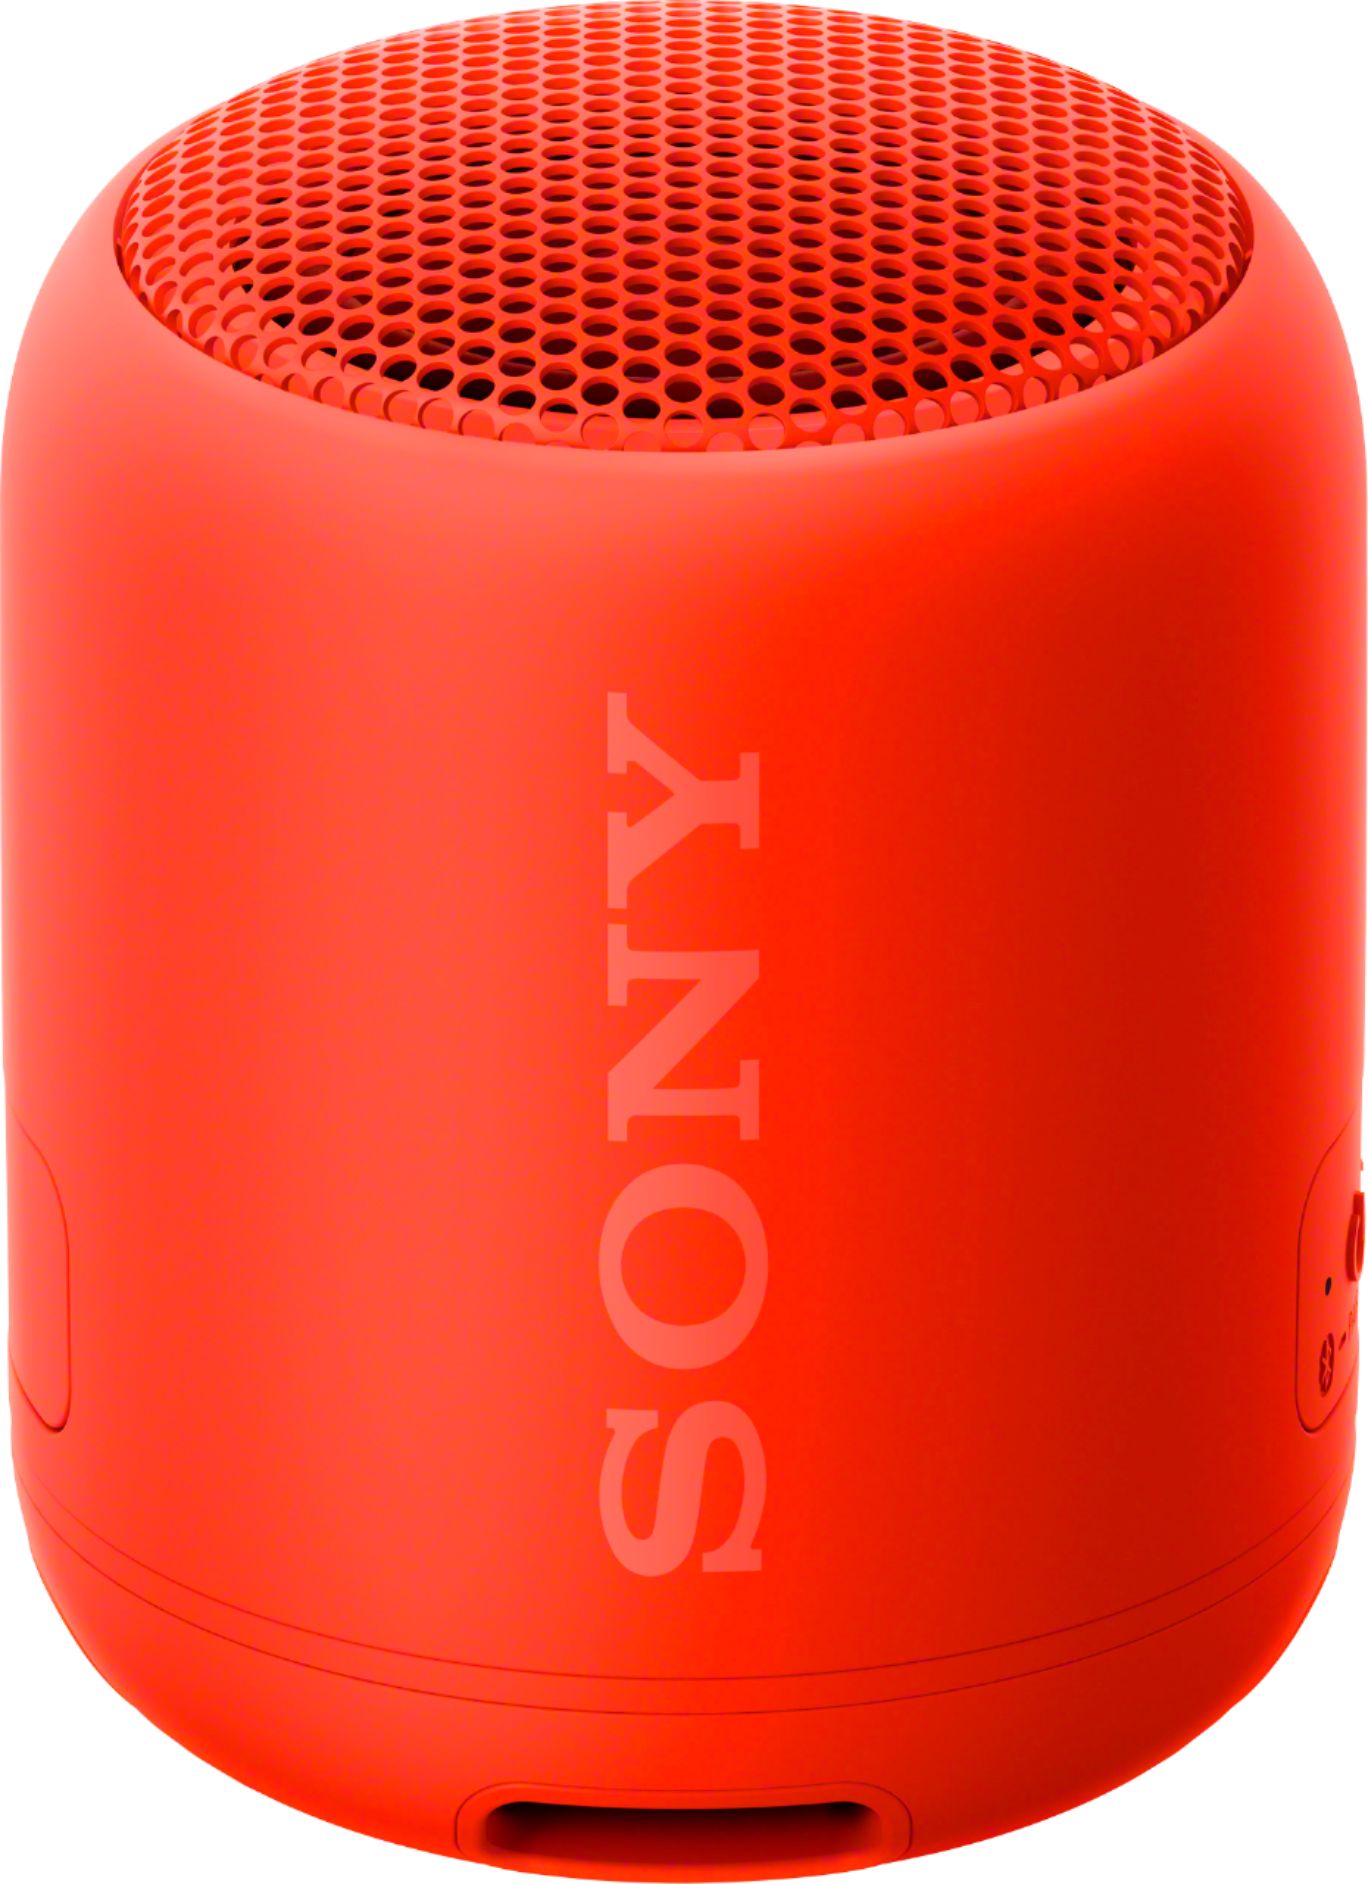 Sony SRS-XB12 Portable Bluetooth Speaker Red - Best Buy